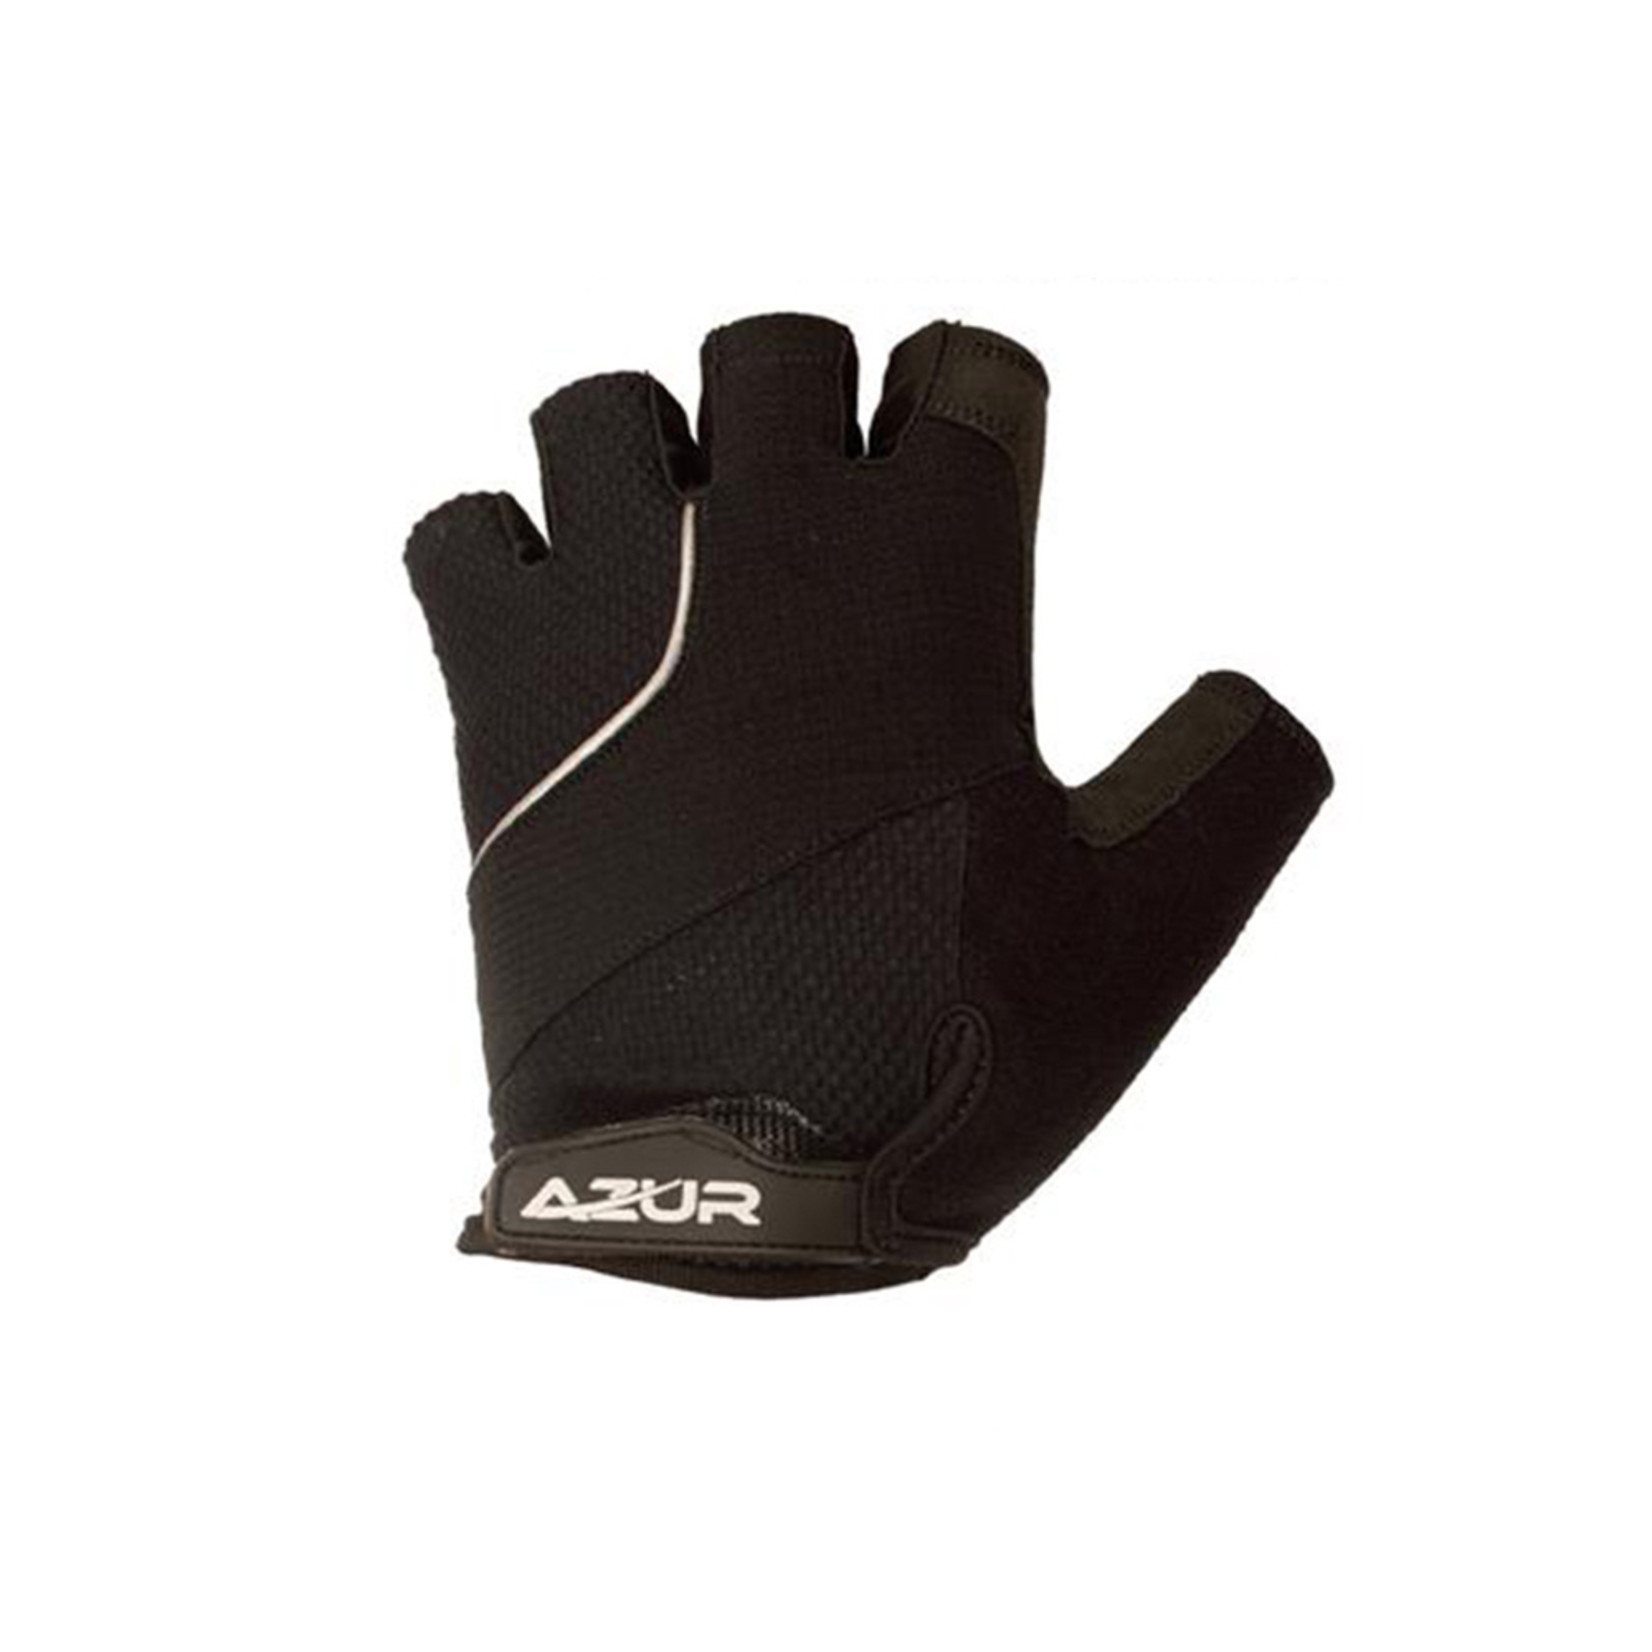 Azur Azur Bike/Cycling Glove - Synthetic Palm - S6 Series - Black - Large